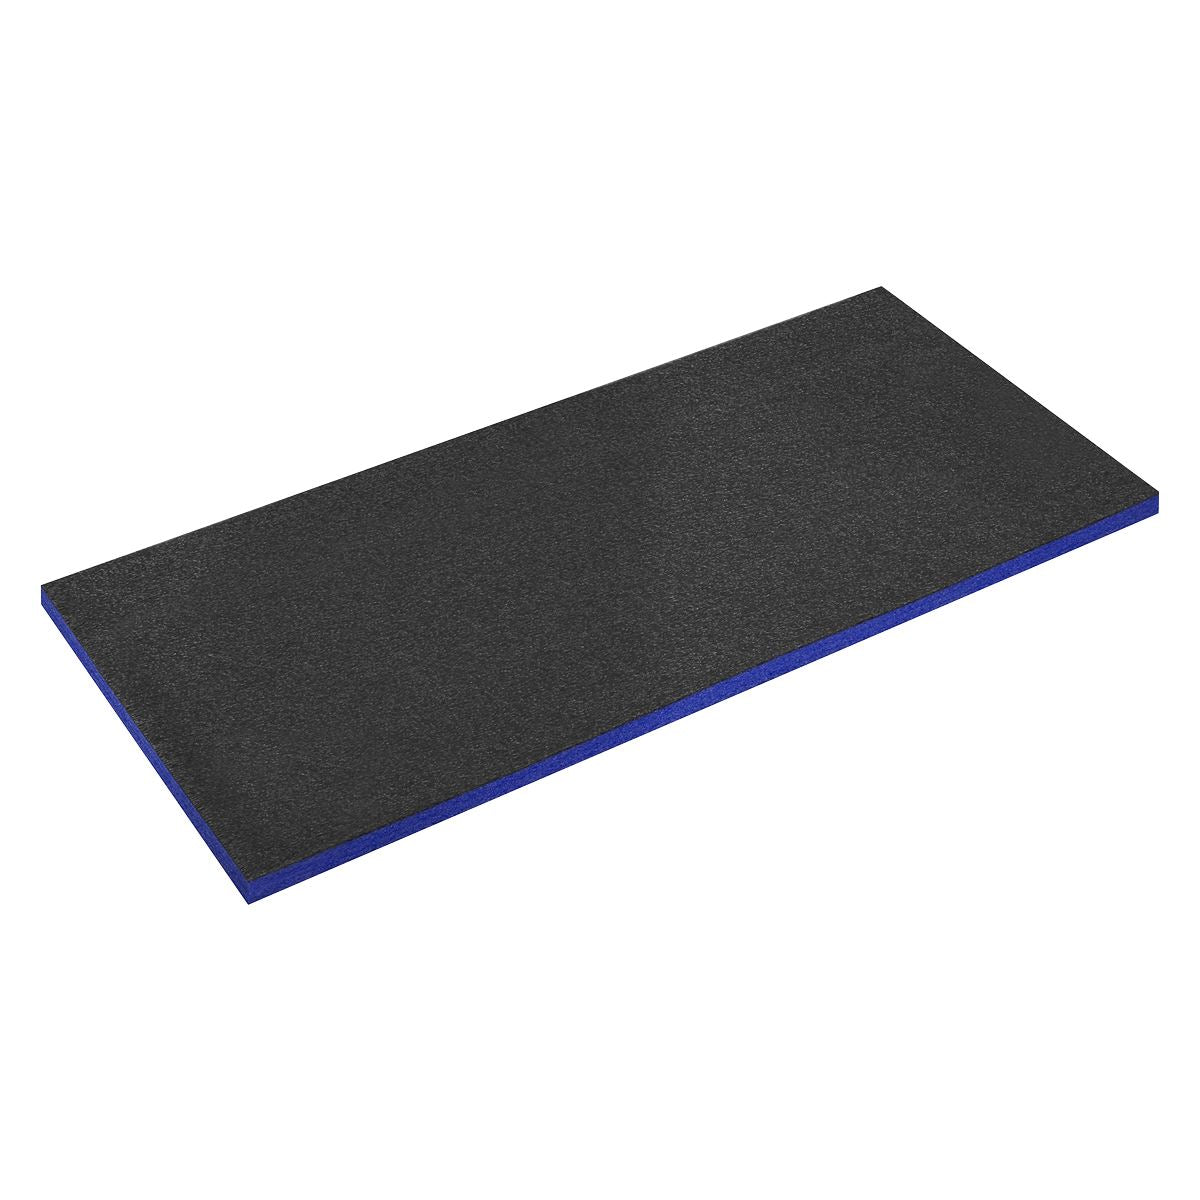 Sealey Easy Peel Shadow Foam Blue Black 1200 x 550 x 30mm Tool Tray Insert